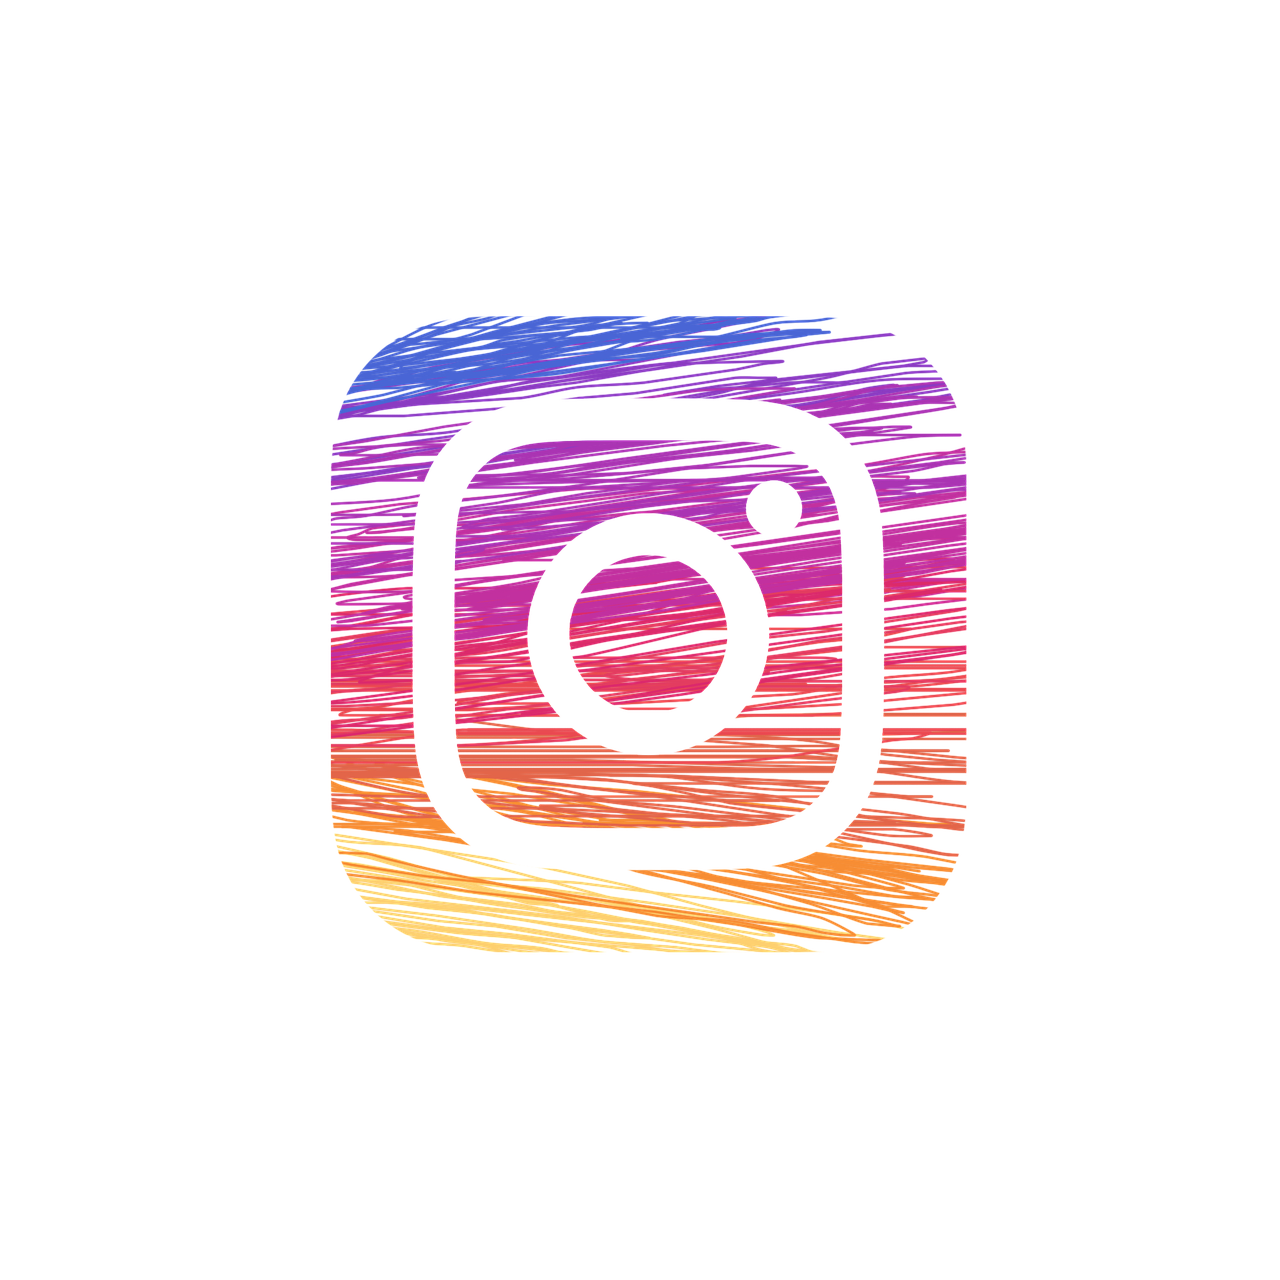 Instagram PVA accounts